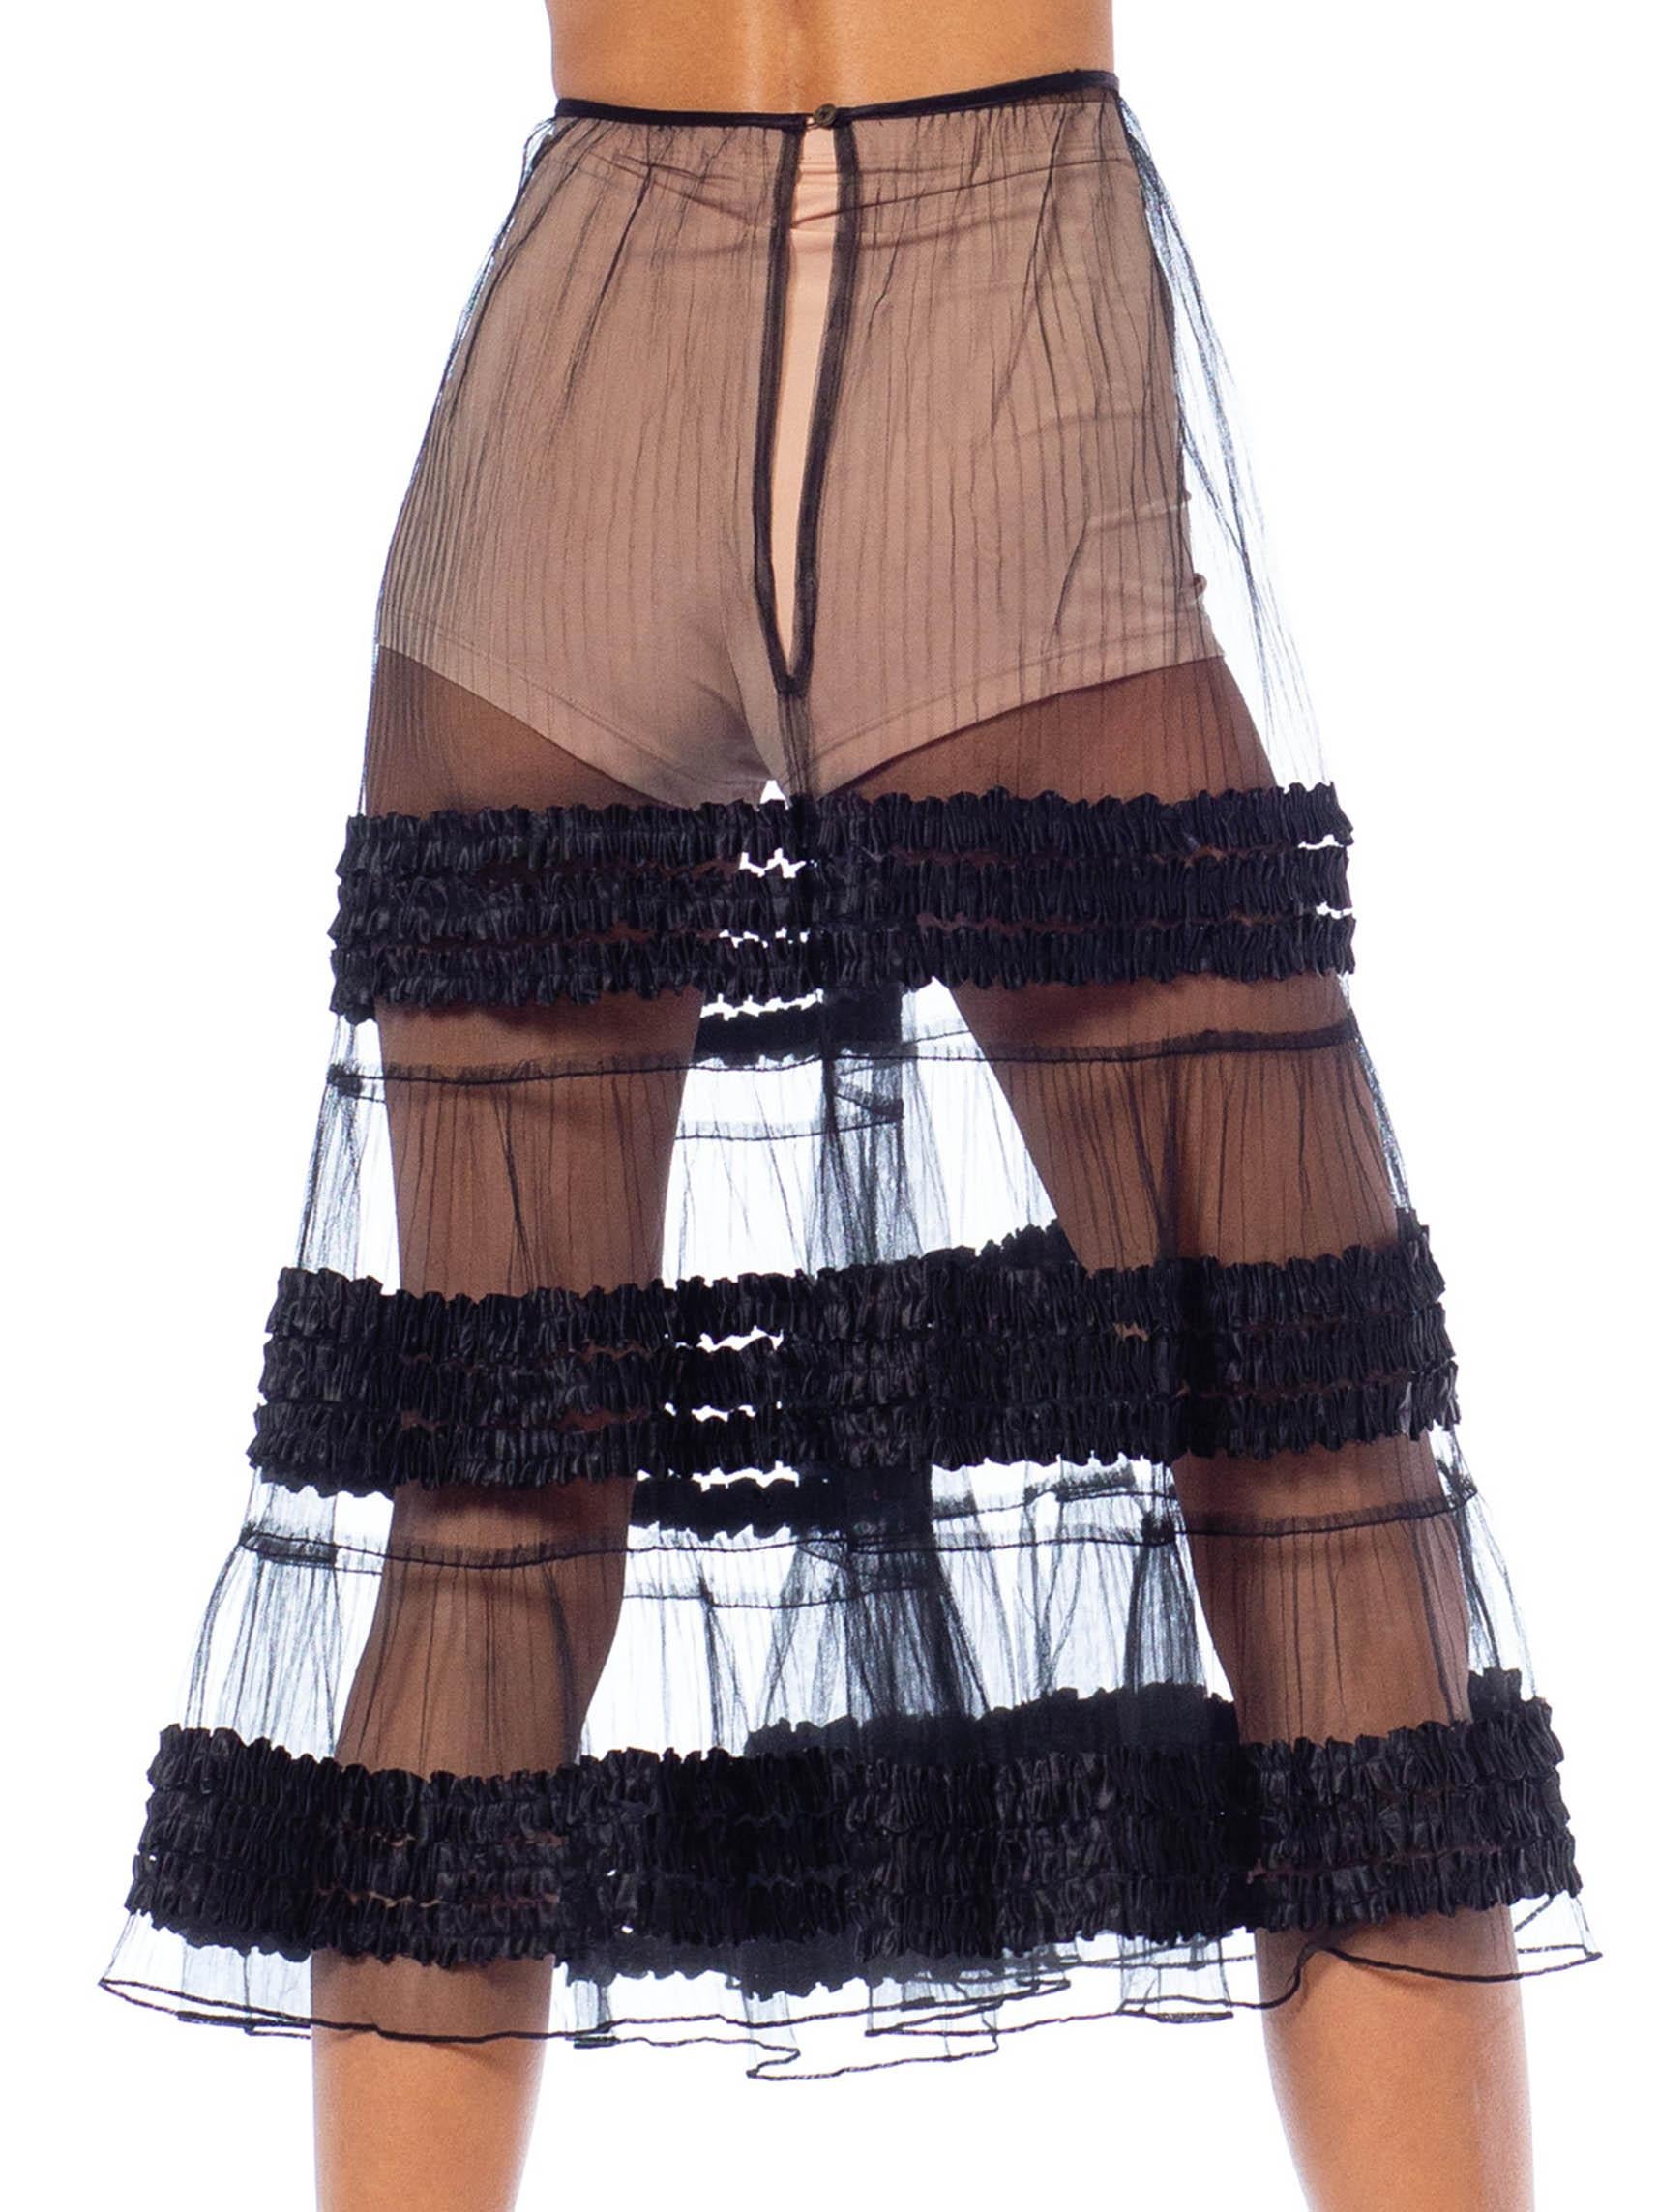 Women's 1950S Black Sheer Poly/Nylon Tulle Petticoat Skirt With Satin Ribbon Ruffles